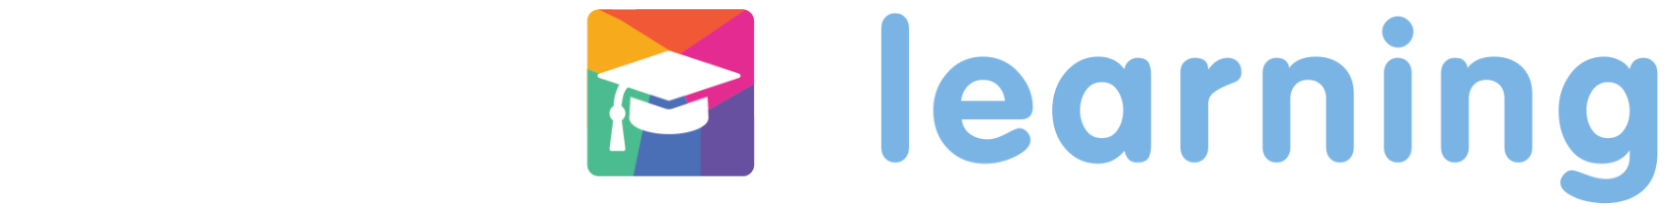 sandbox learning logo